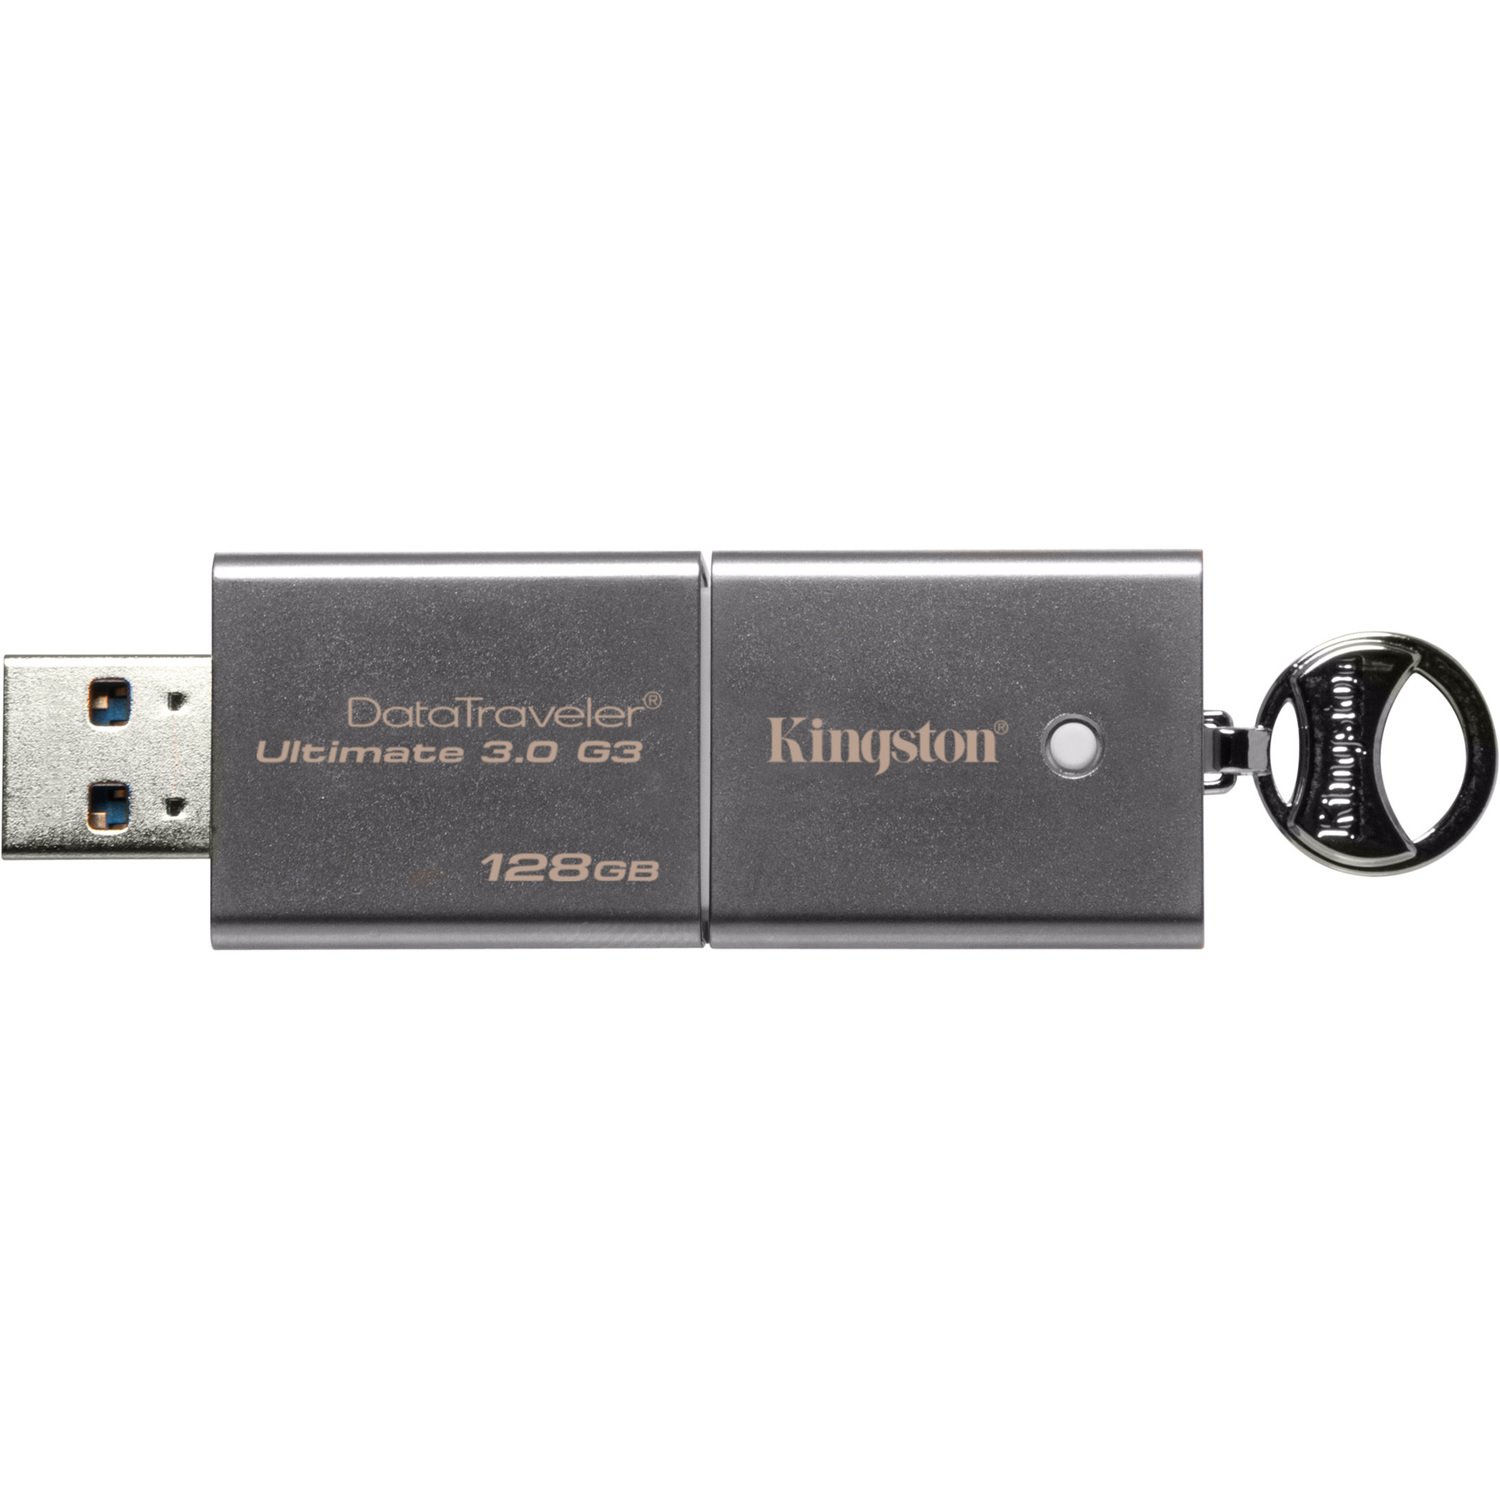 Kingston DataTraveler Ultimate 3.0 G3 128 GB USB 3.0 Flash Drive